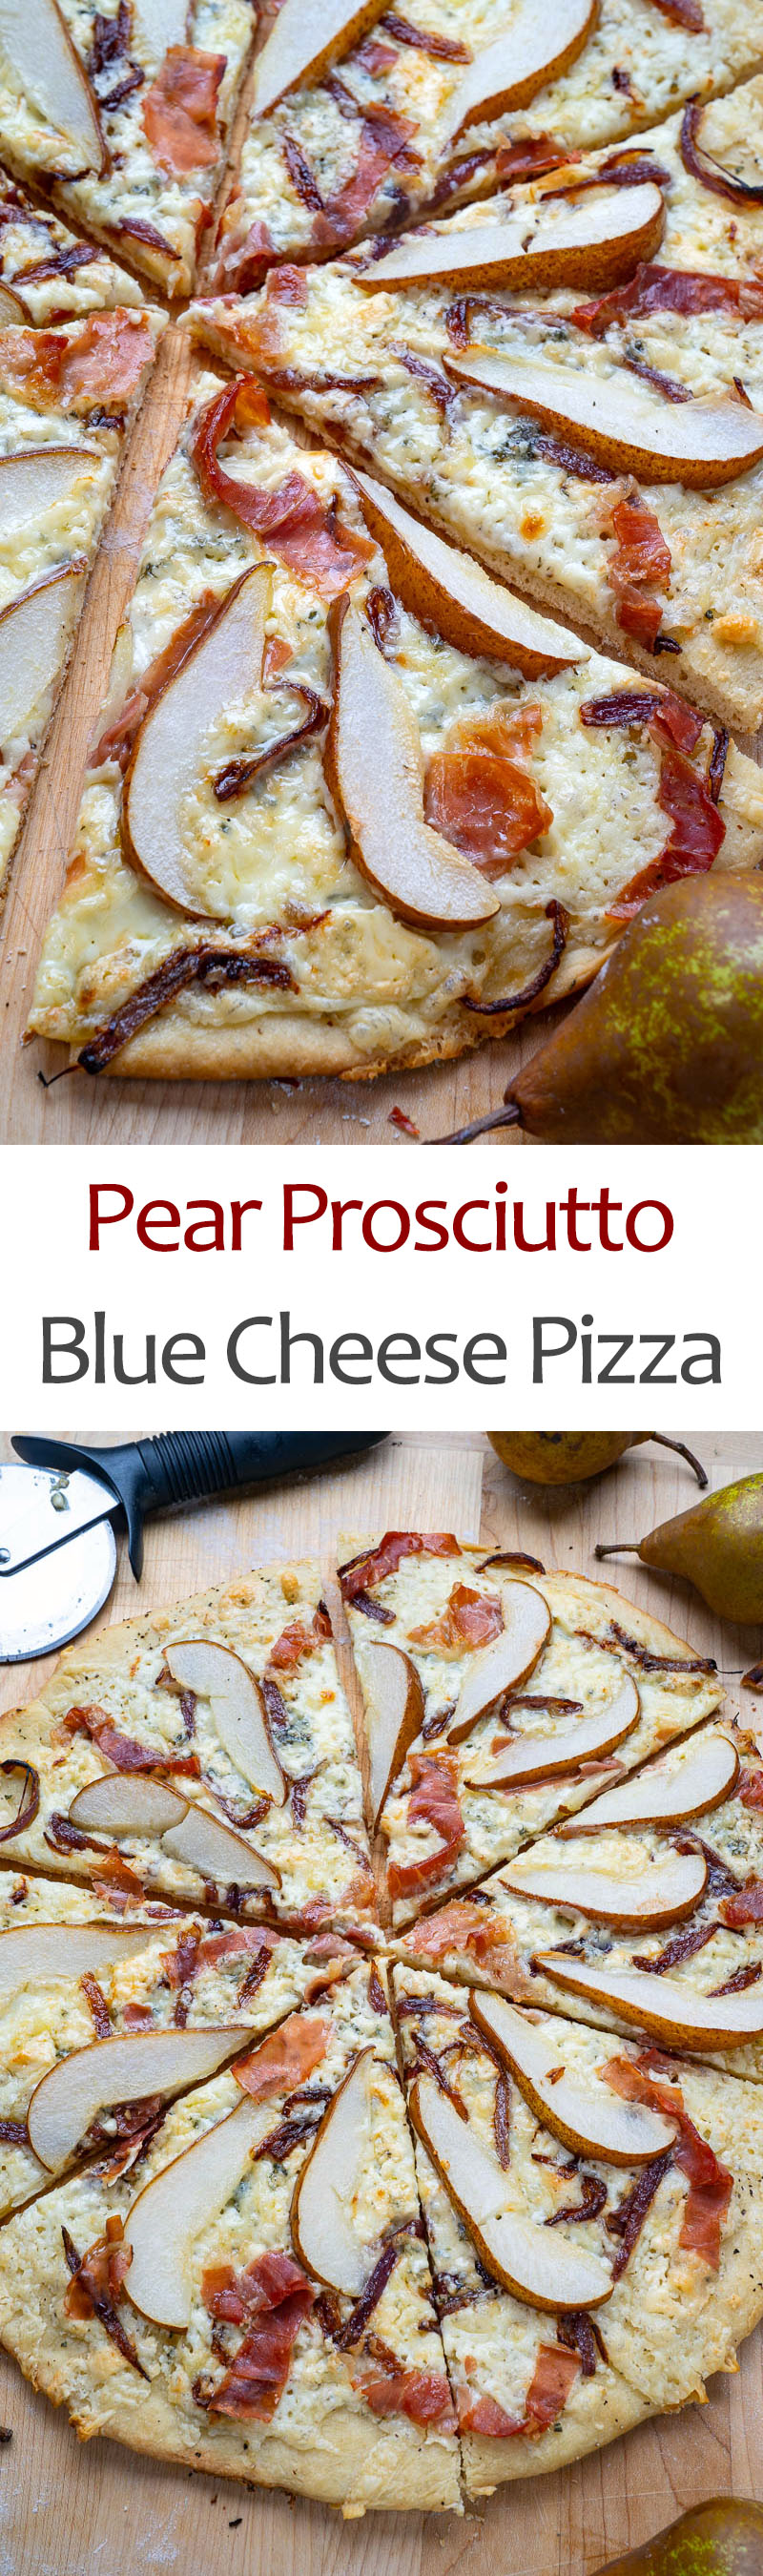 Pear Prosciutto and Blue Cheese Pizza